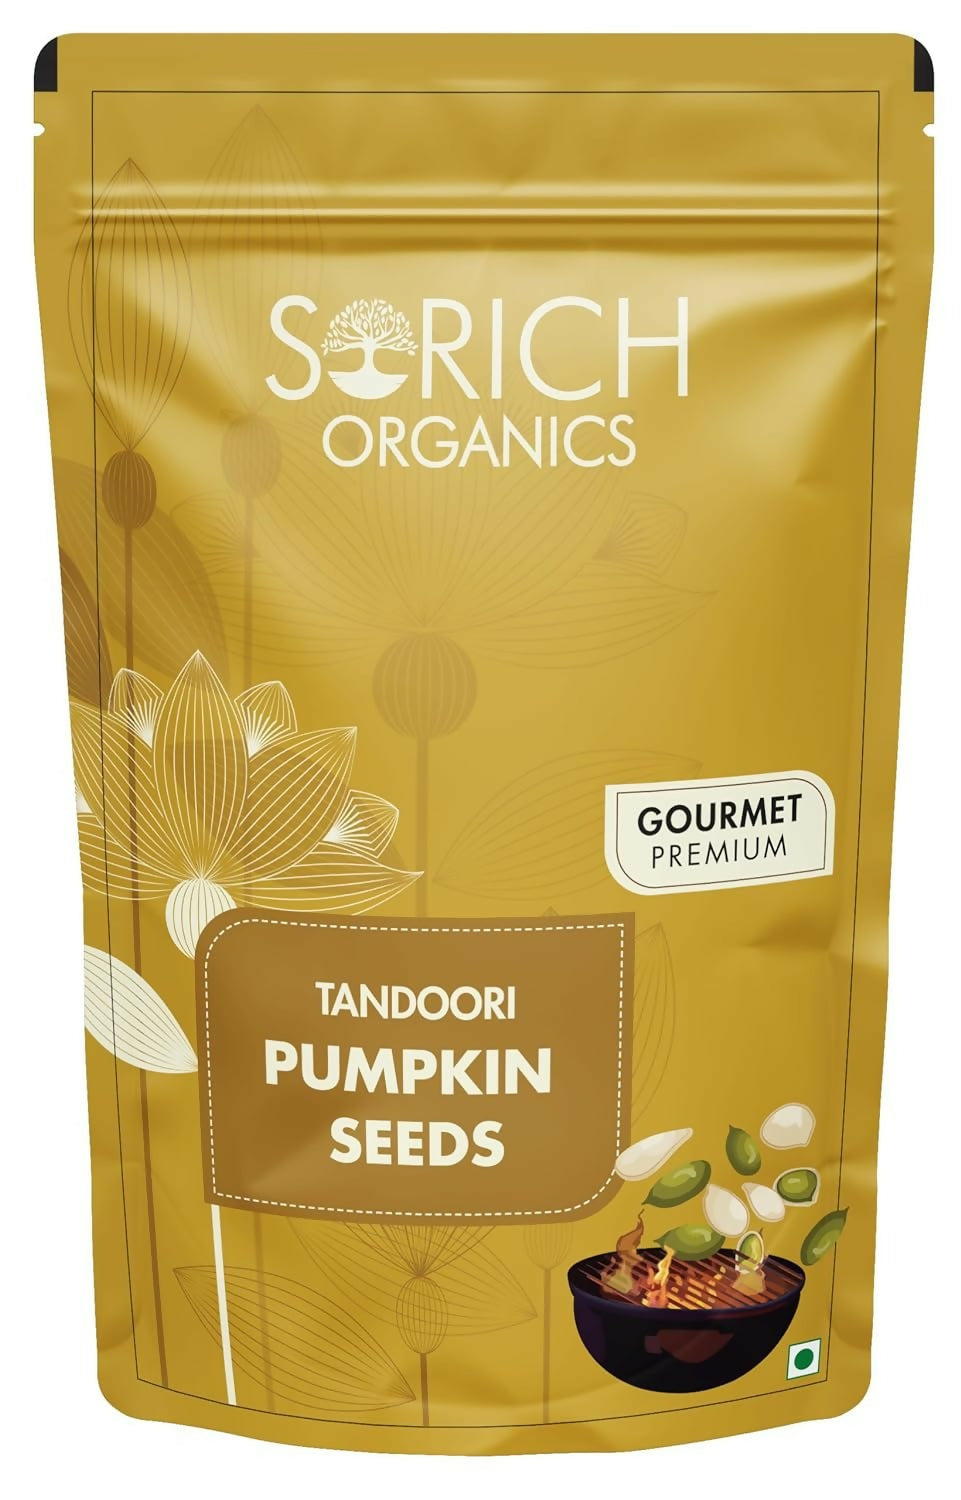 Sorich Organics Tandoori Pumpkin Seeds - BUDNE